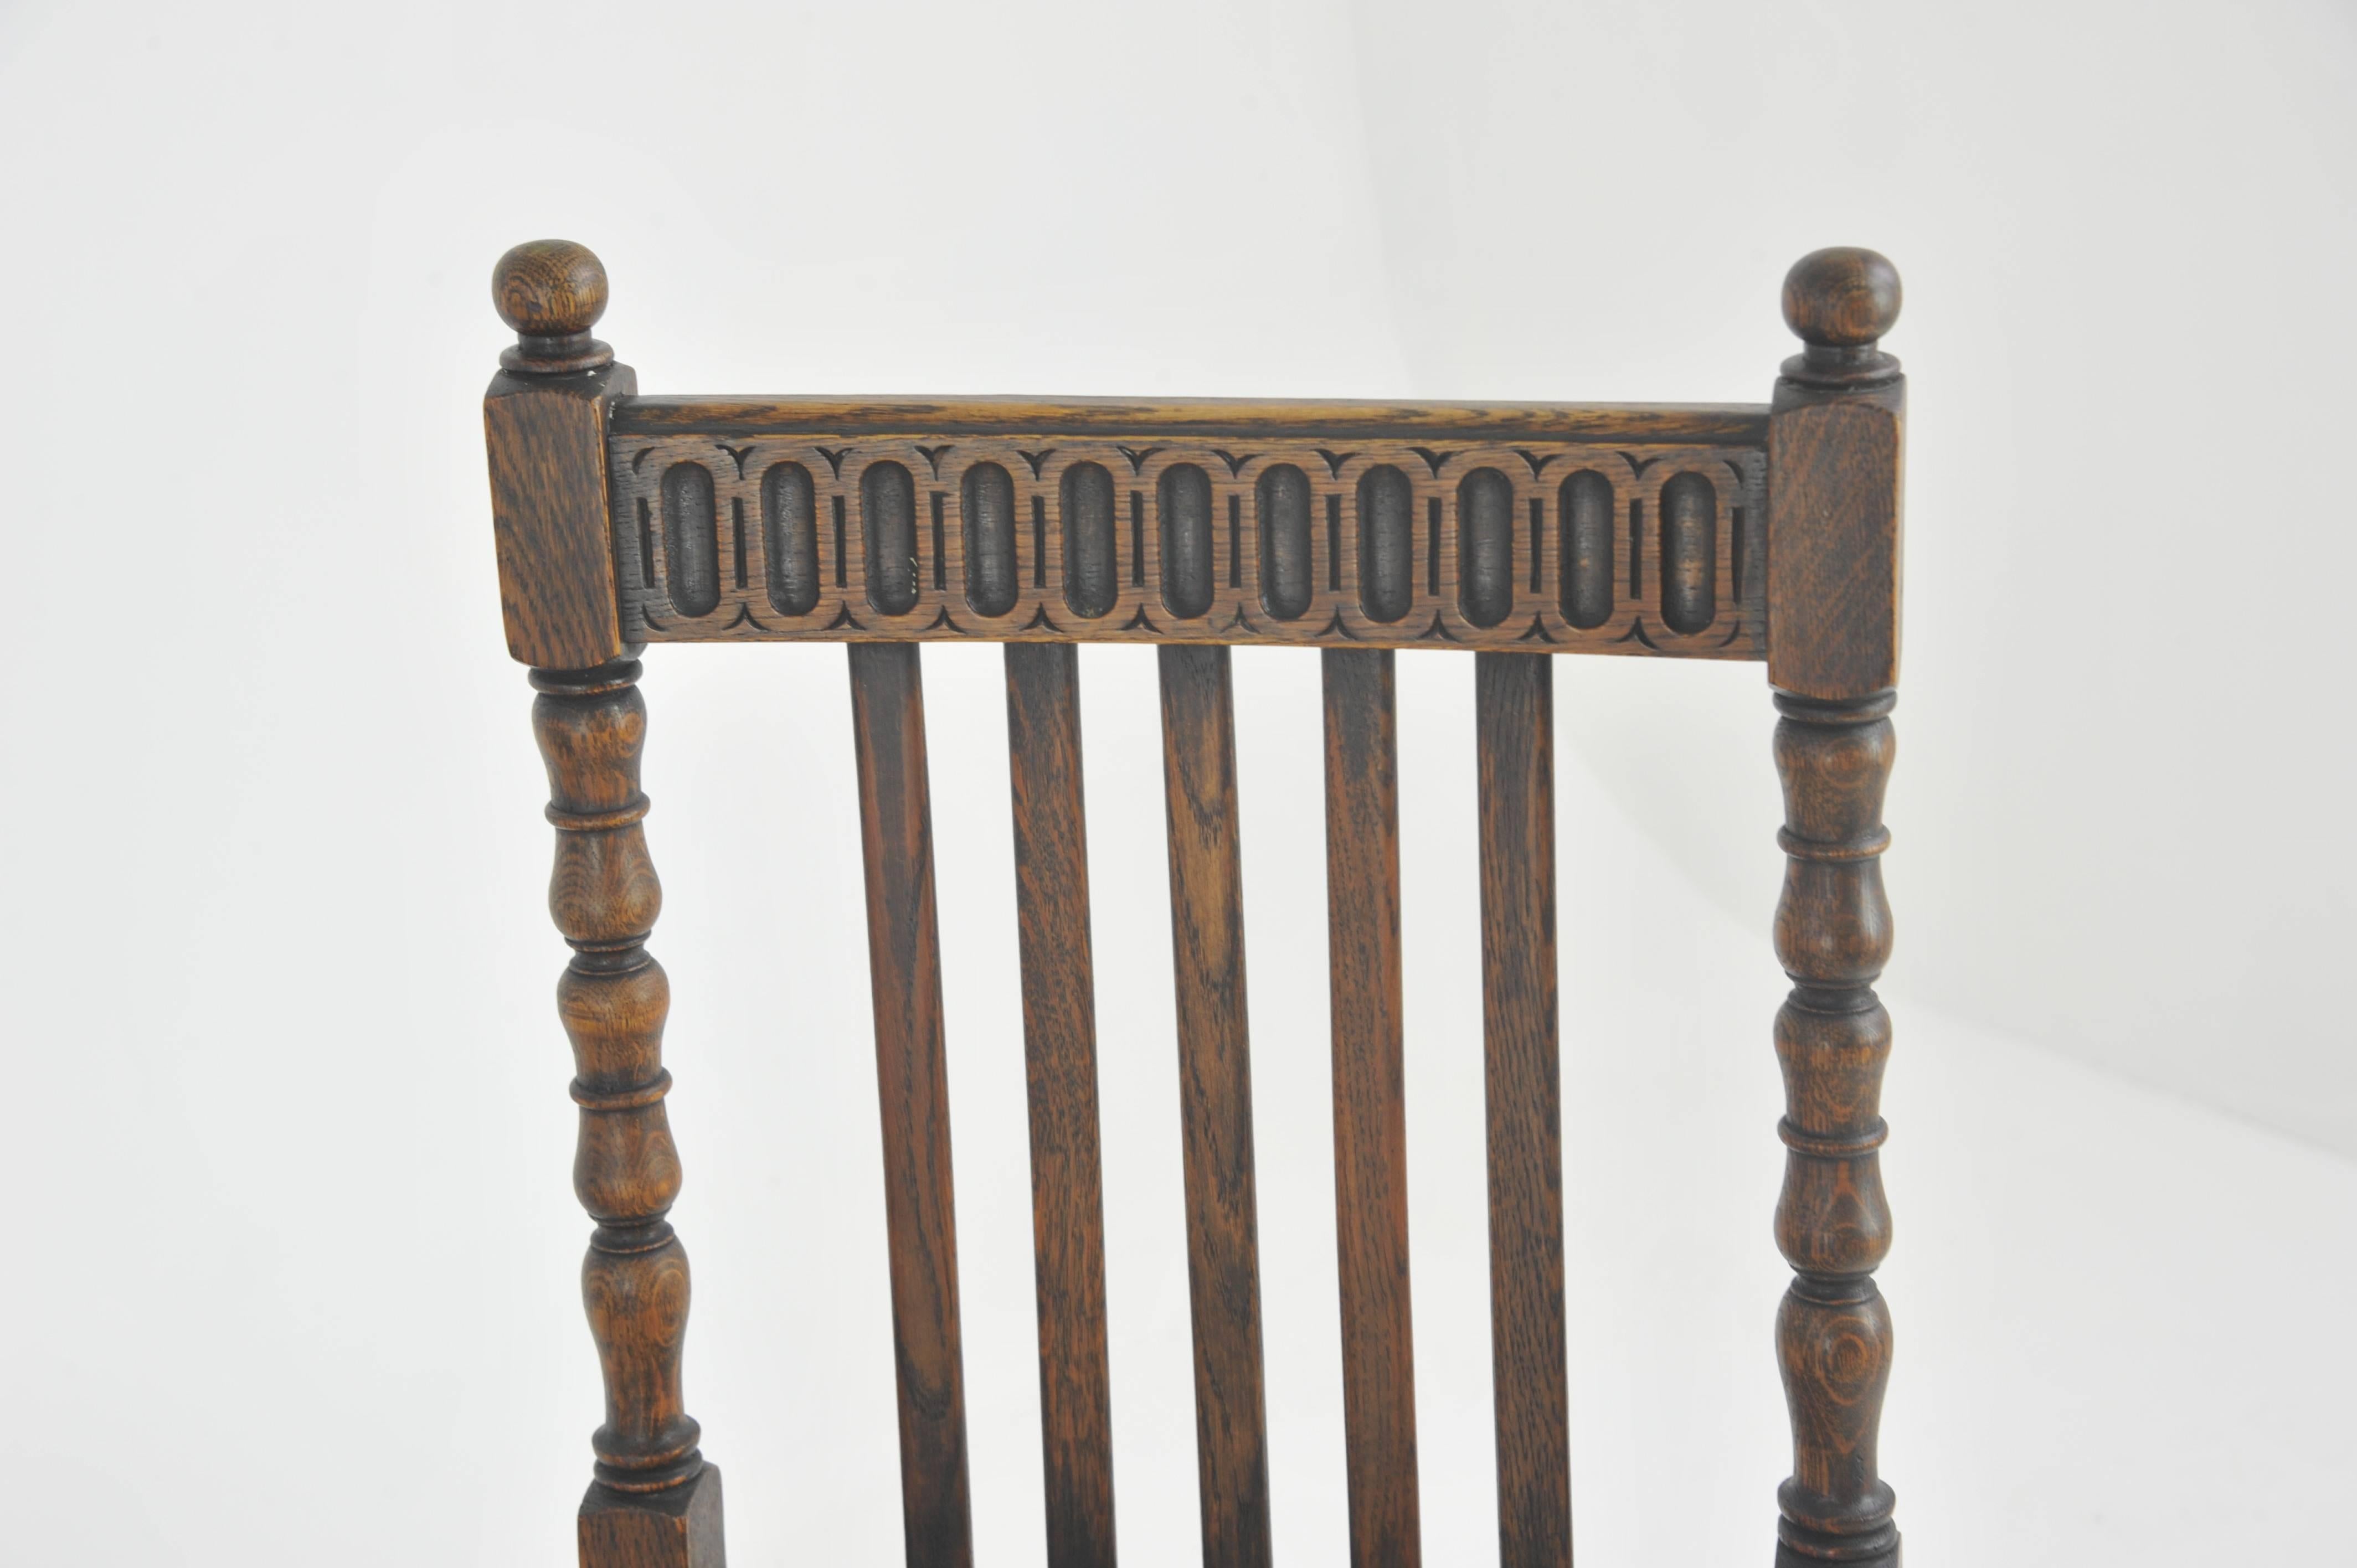 antique high back chair